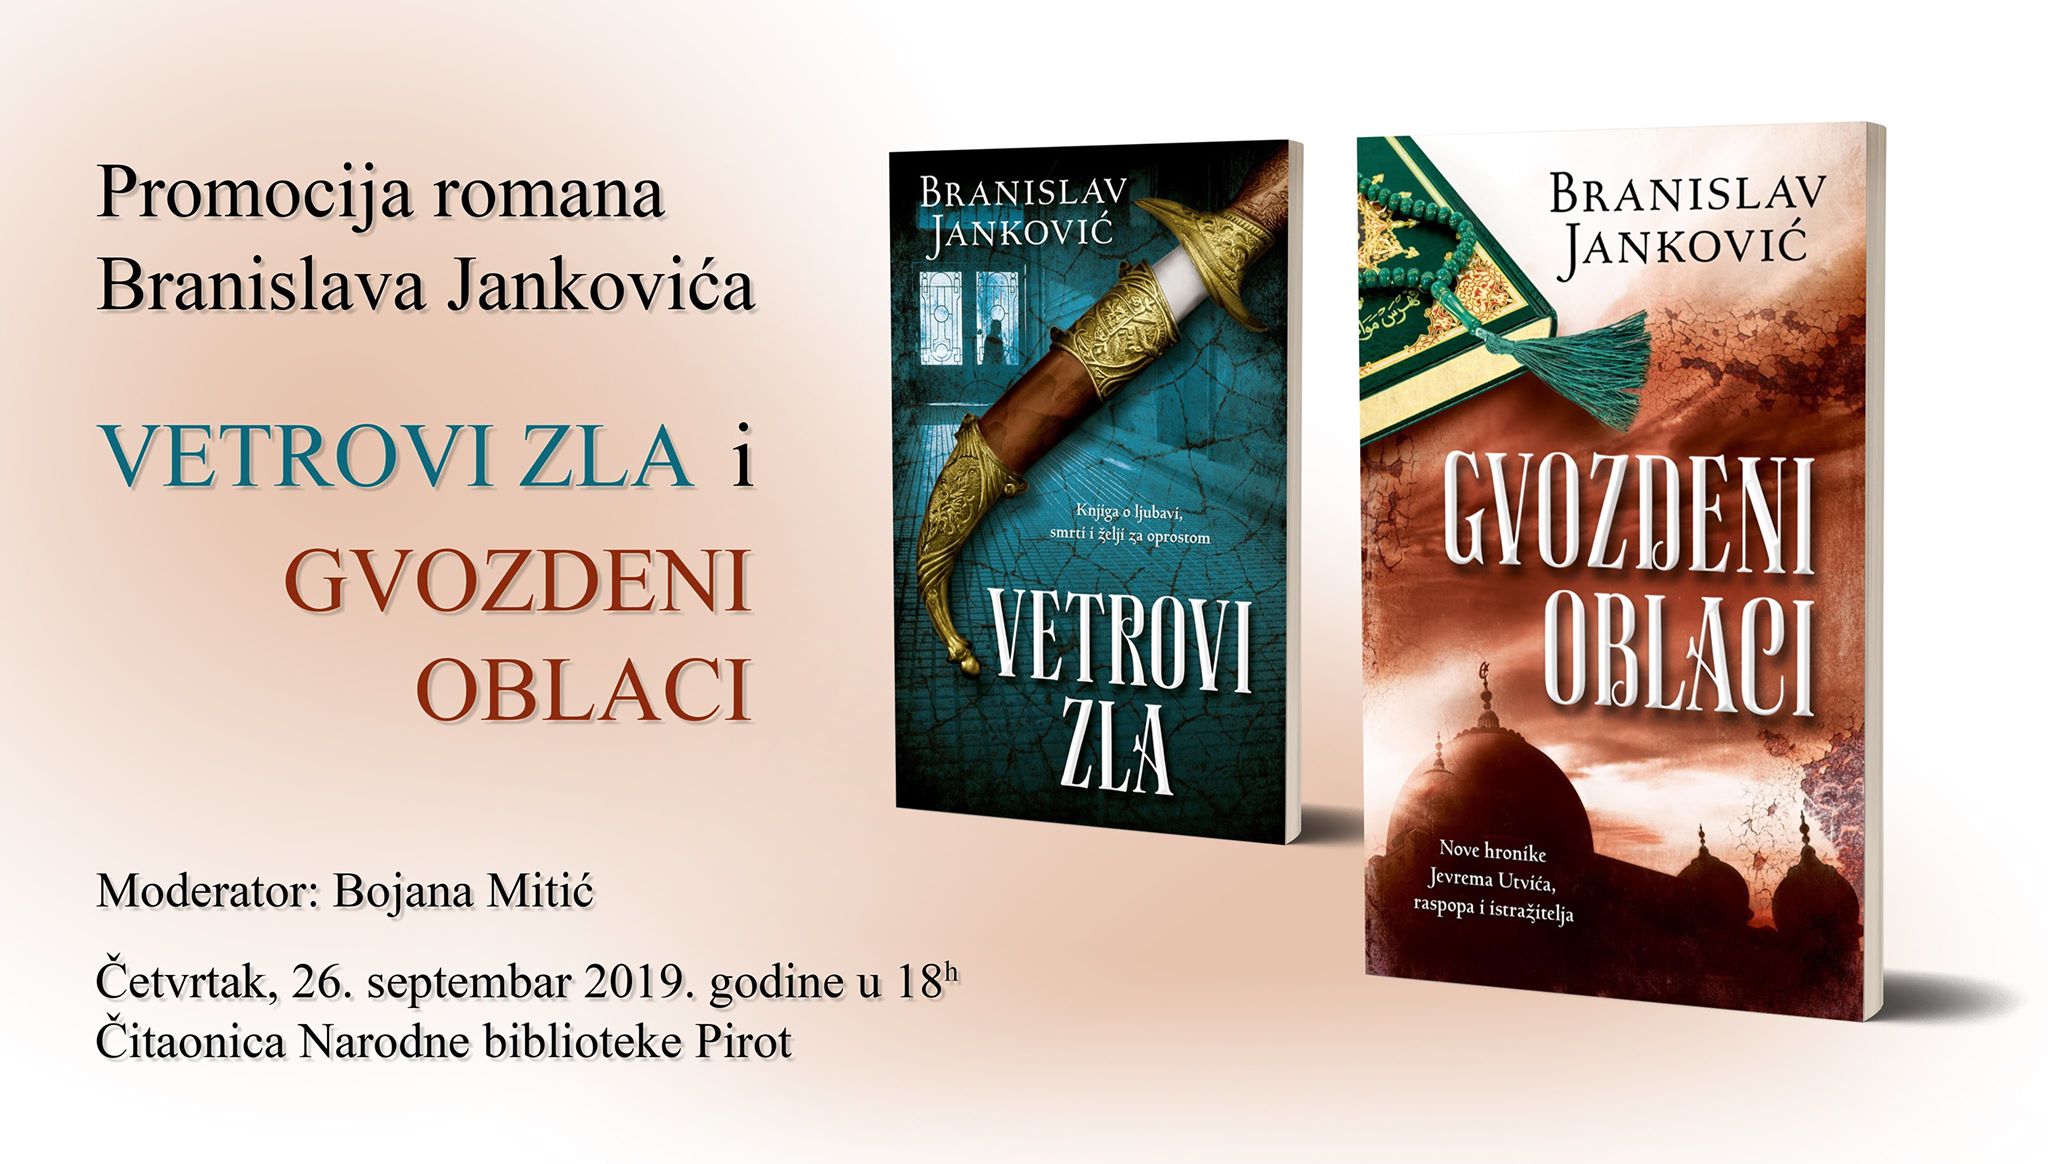 Photo of “Gvozden oblaci” i “Vetrovi zla”- promocija knjiga Branislava Jankovića u Pirotu